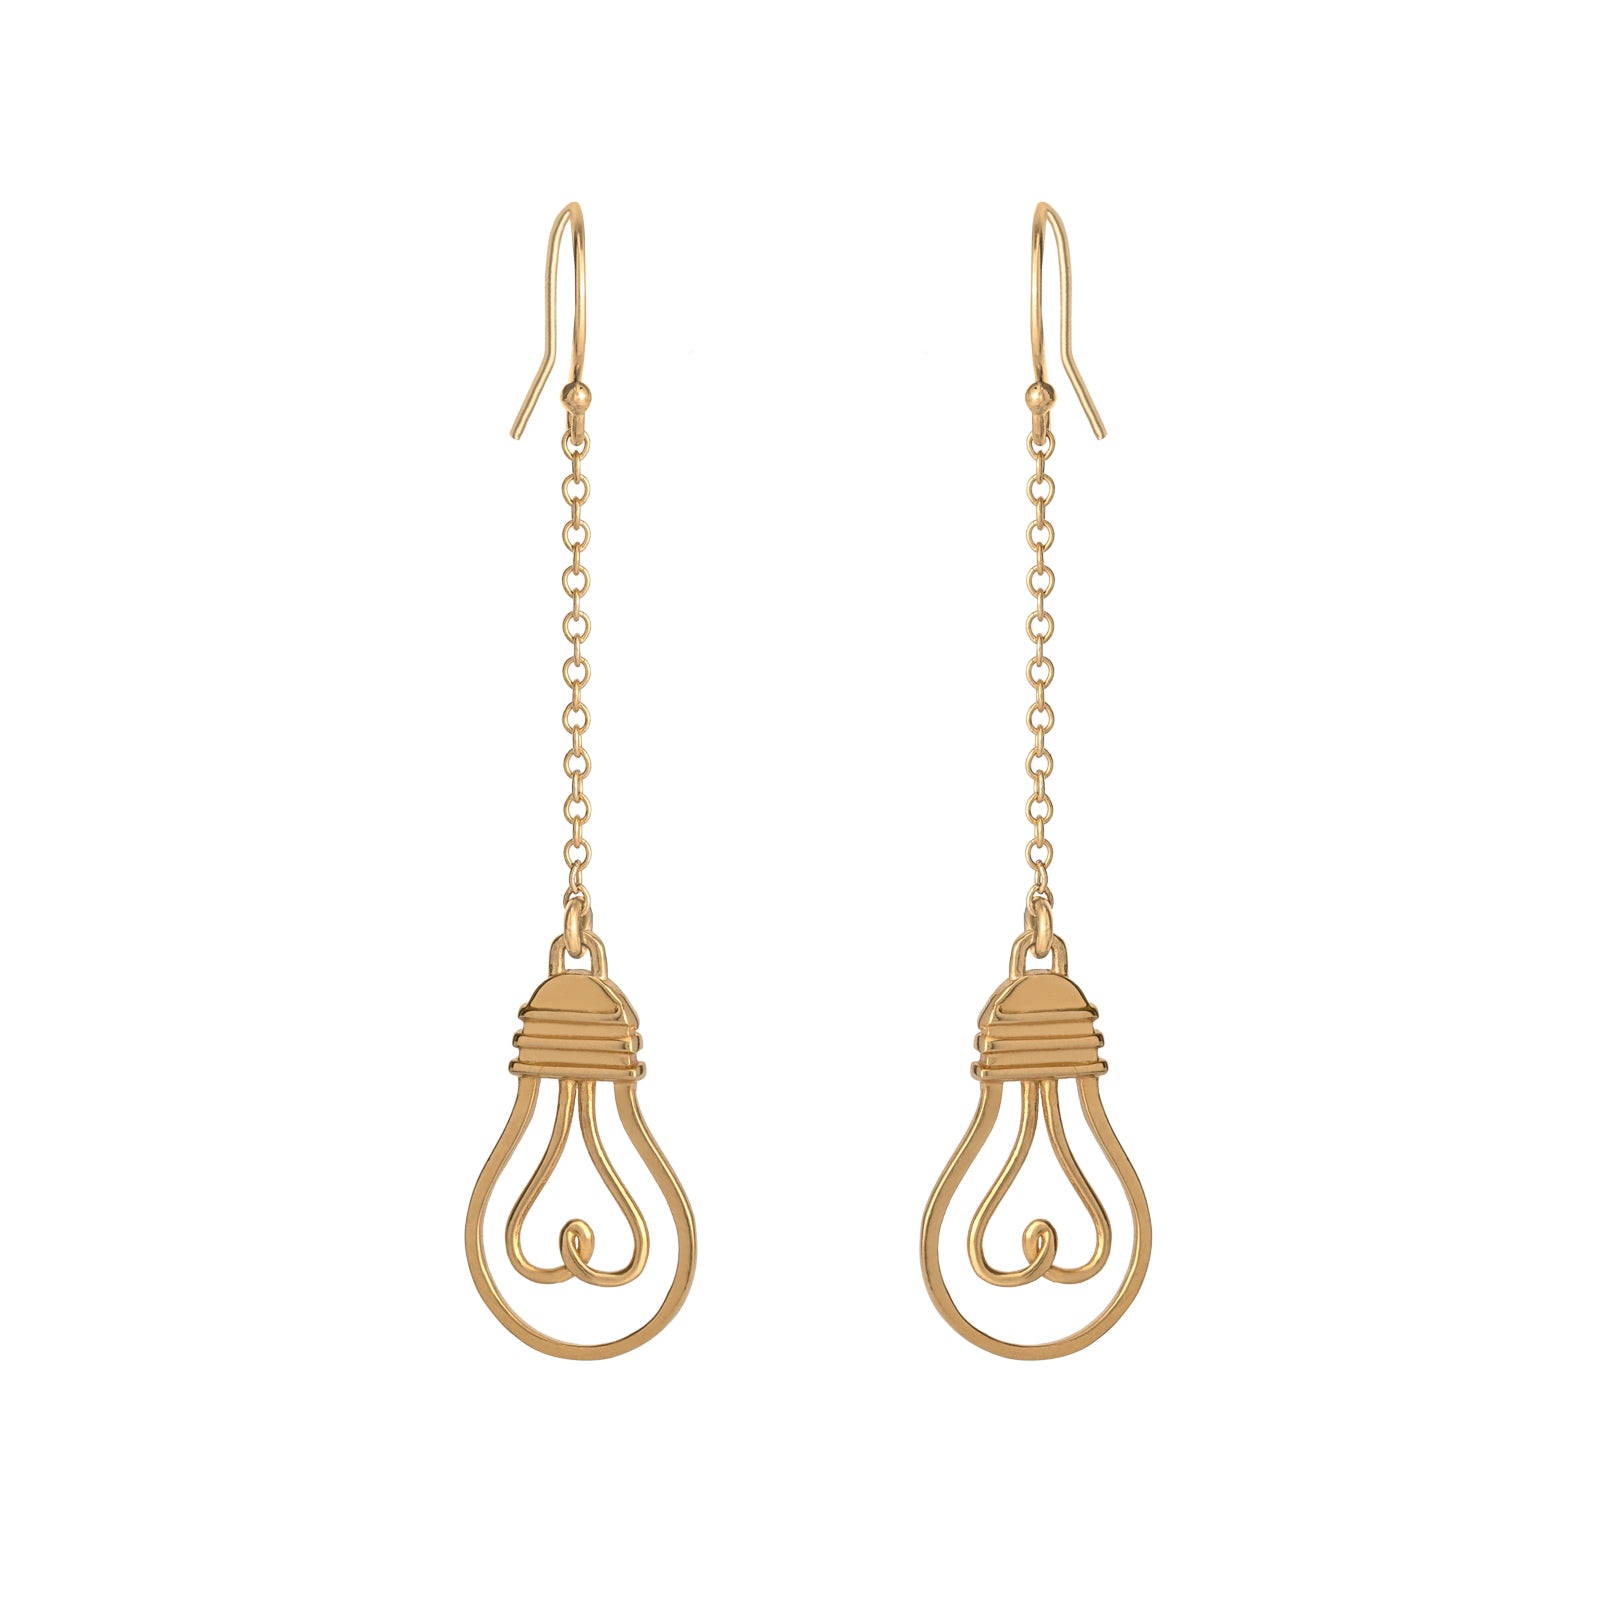 light bulb earrings with heart filament 14k gold filled